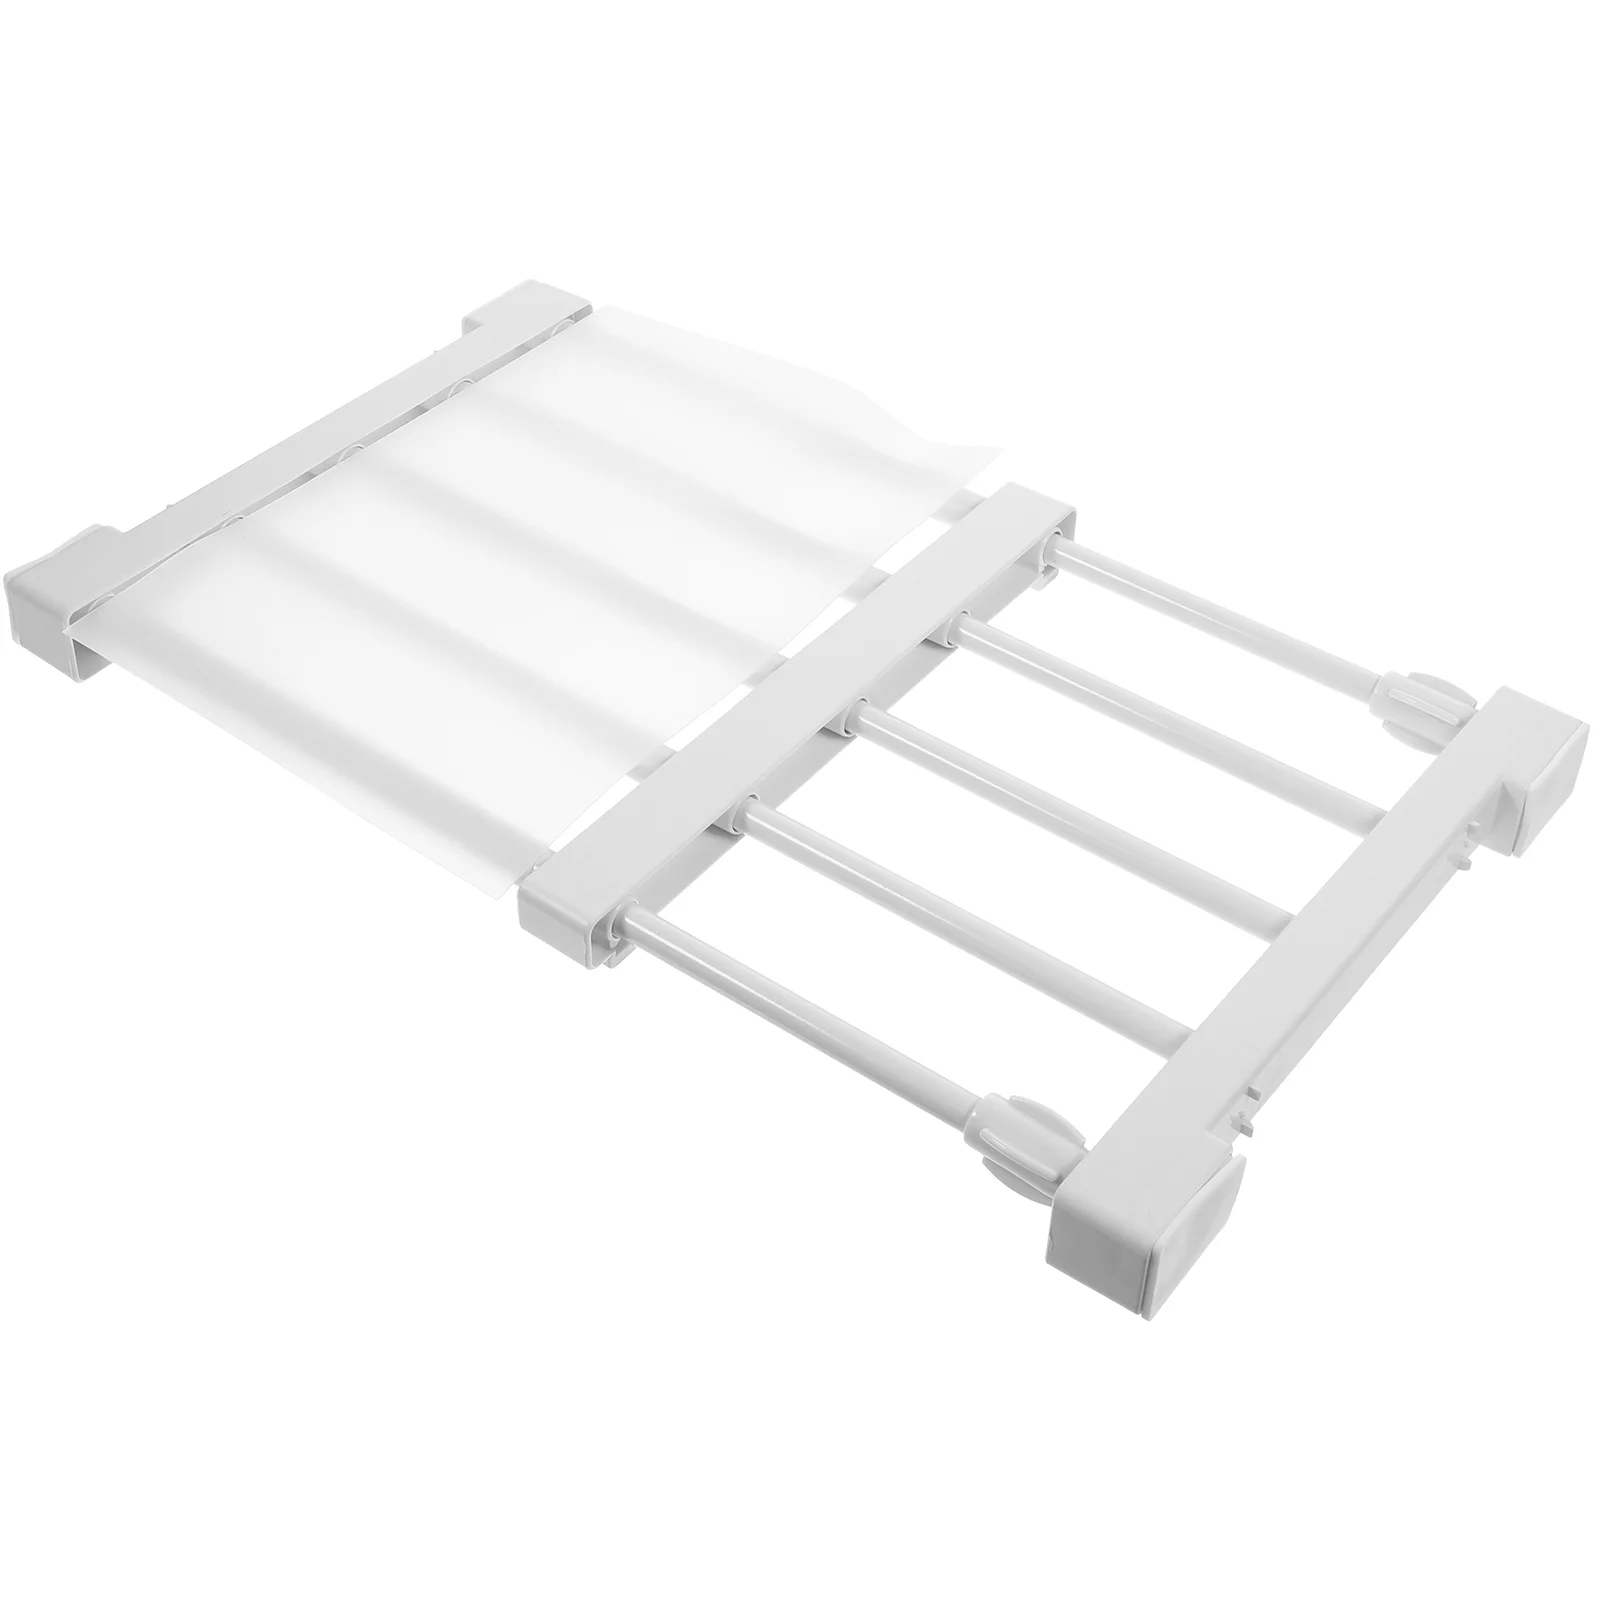 

Storage Artifact White Shelves Adjustable Closet Wear-resistant Rack Pp Laundry Room Collapsible Organizer Shelf